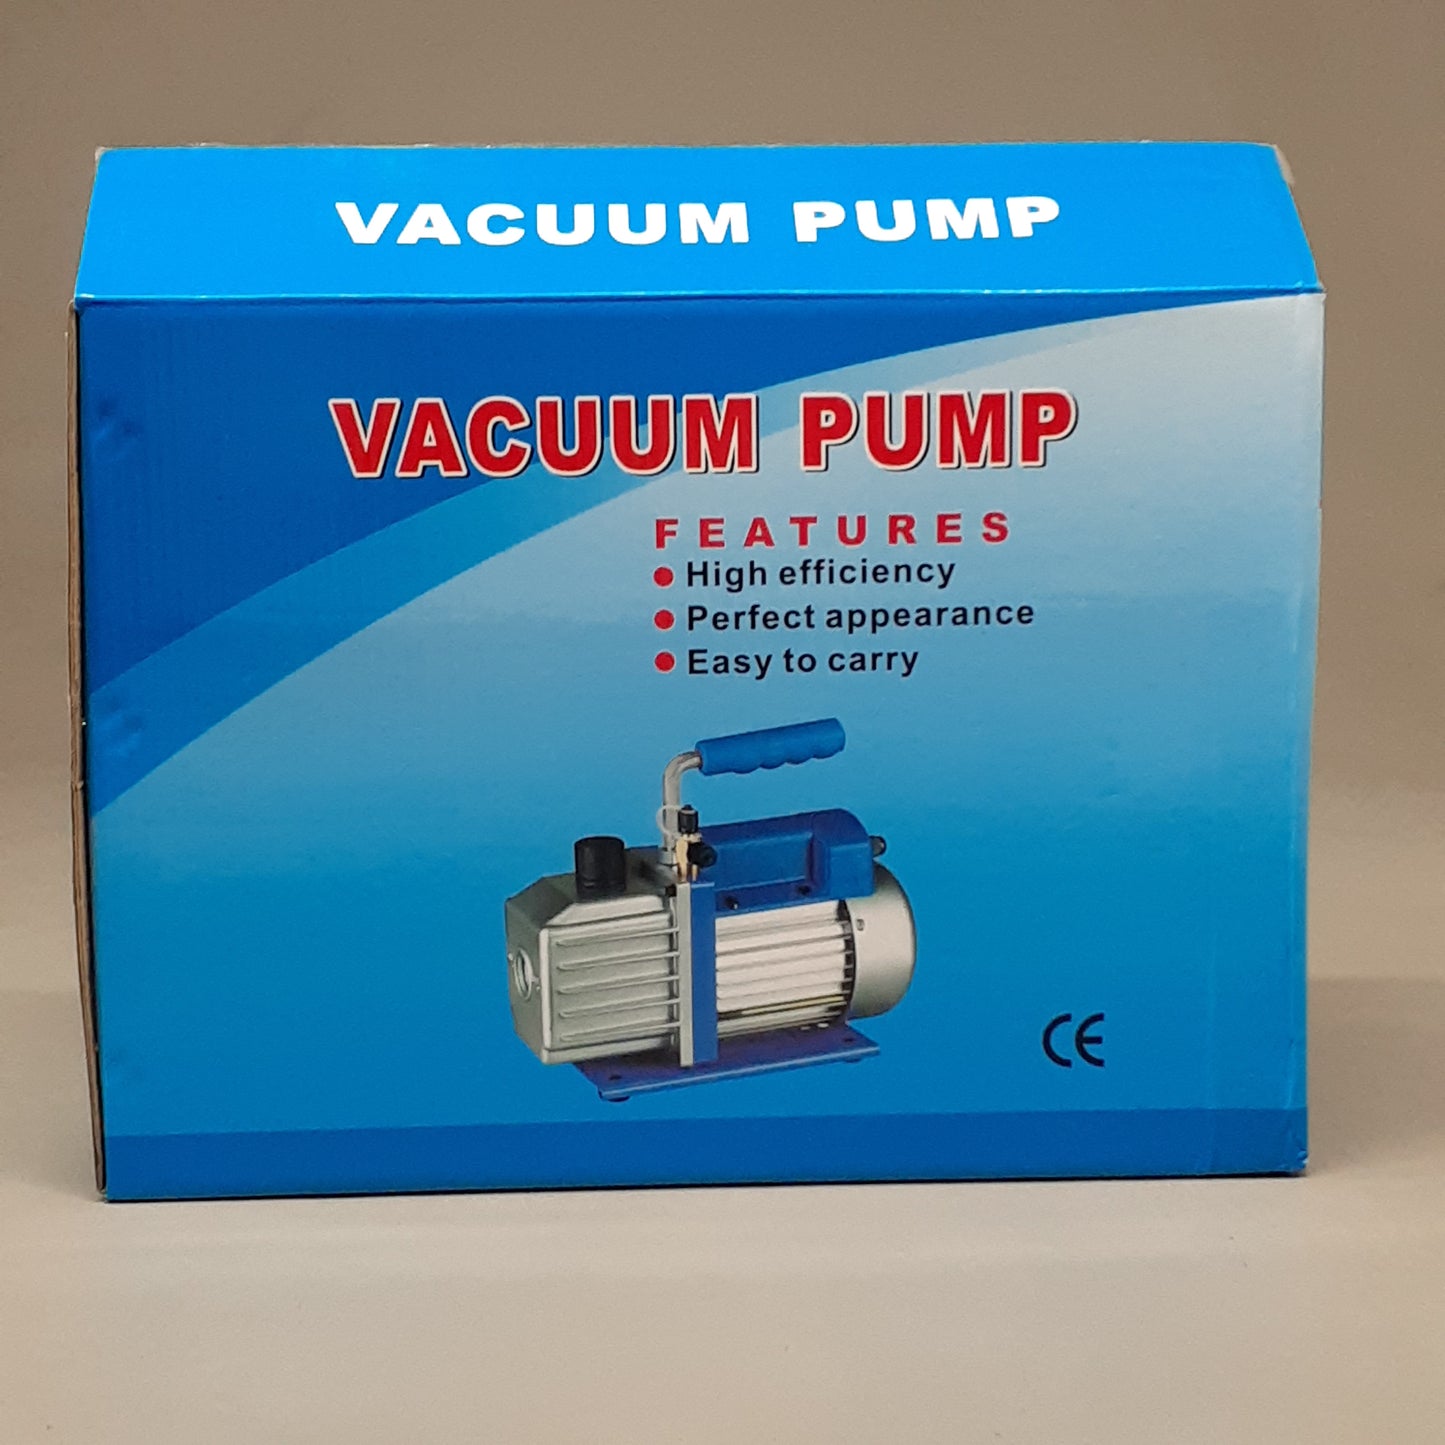 VEVOR Vacuum Pump 2 Gallon Chamber 1/4HP Single Stage 110V CW8527 (New)